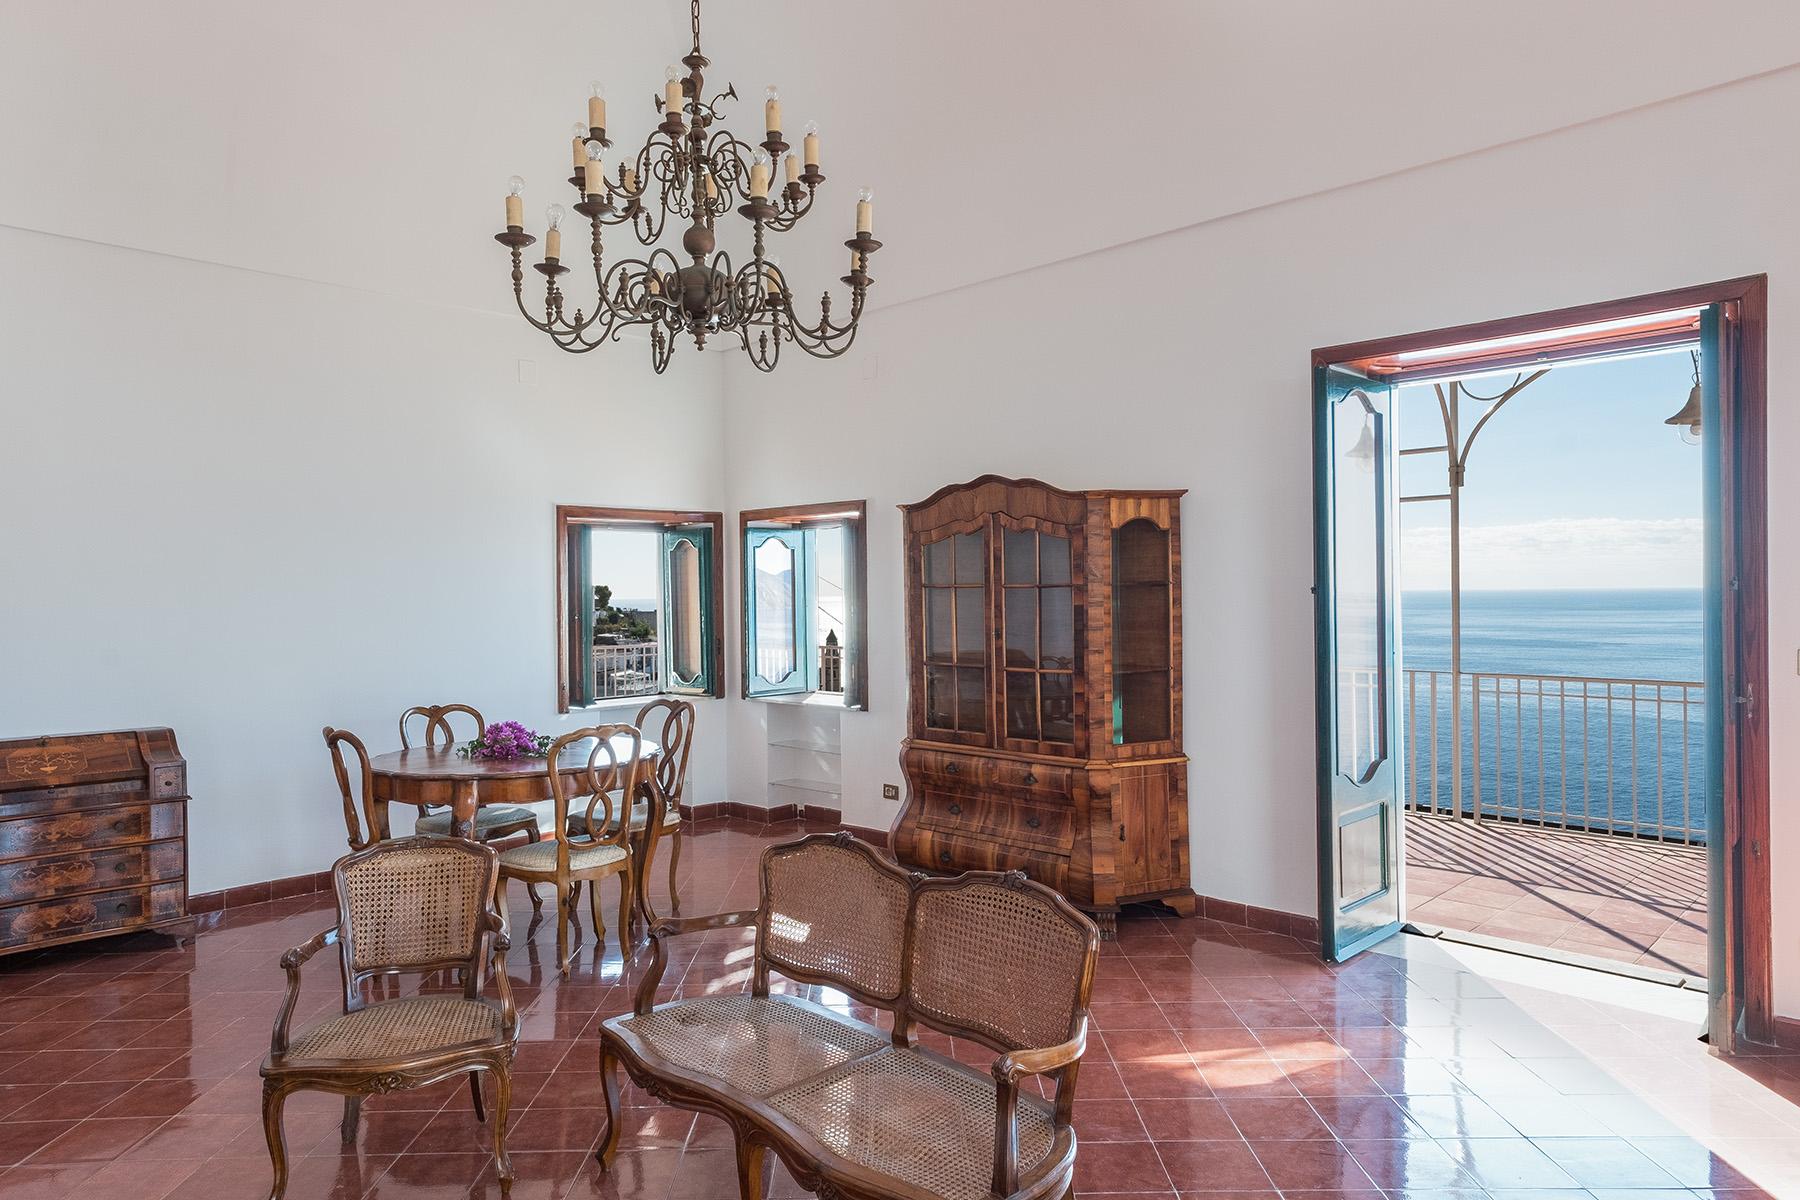 Charming sea view villa on the Amalfi Coast - 8